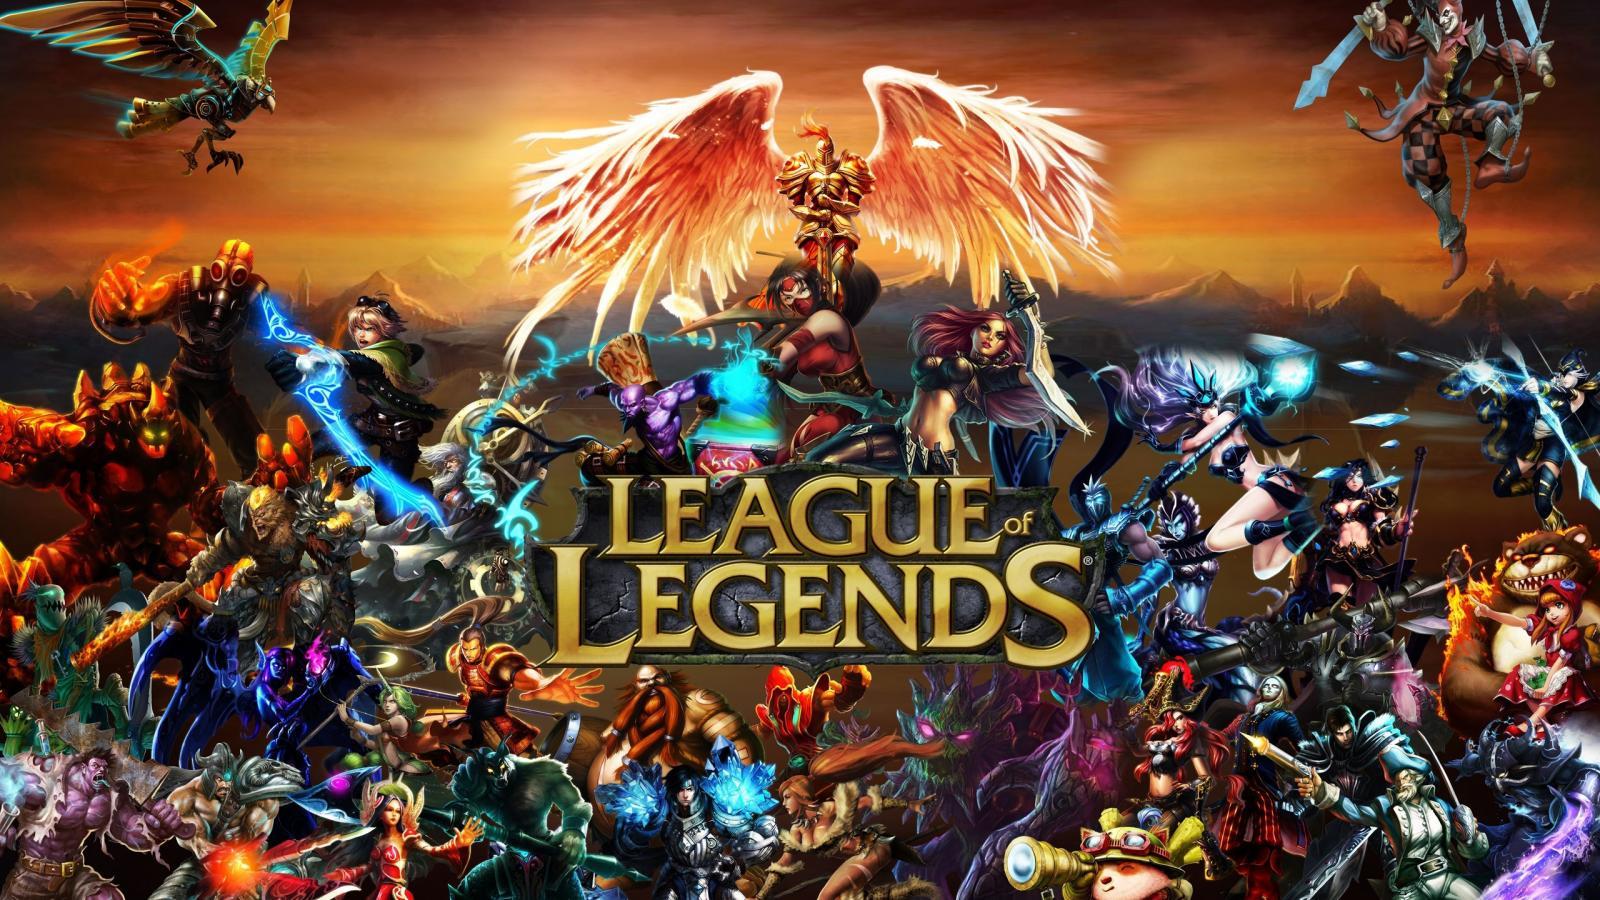 Descargar League of Legends Gratis en español para Windows